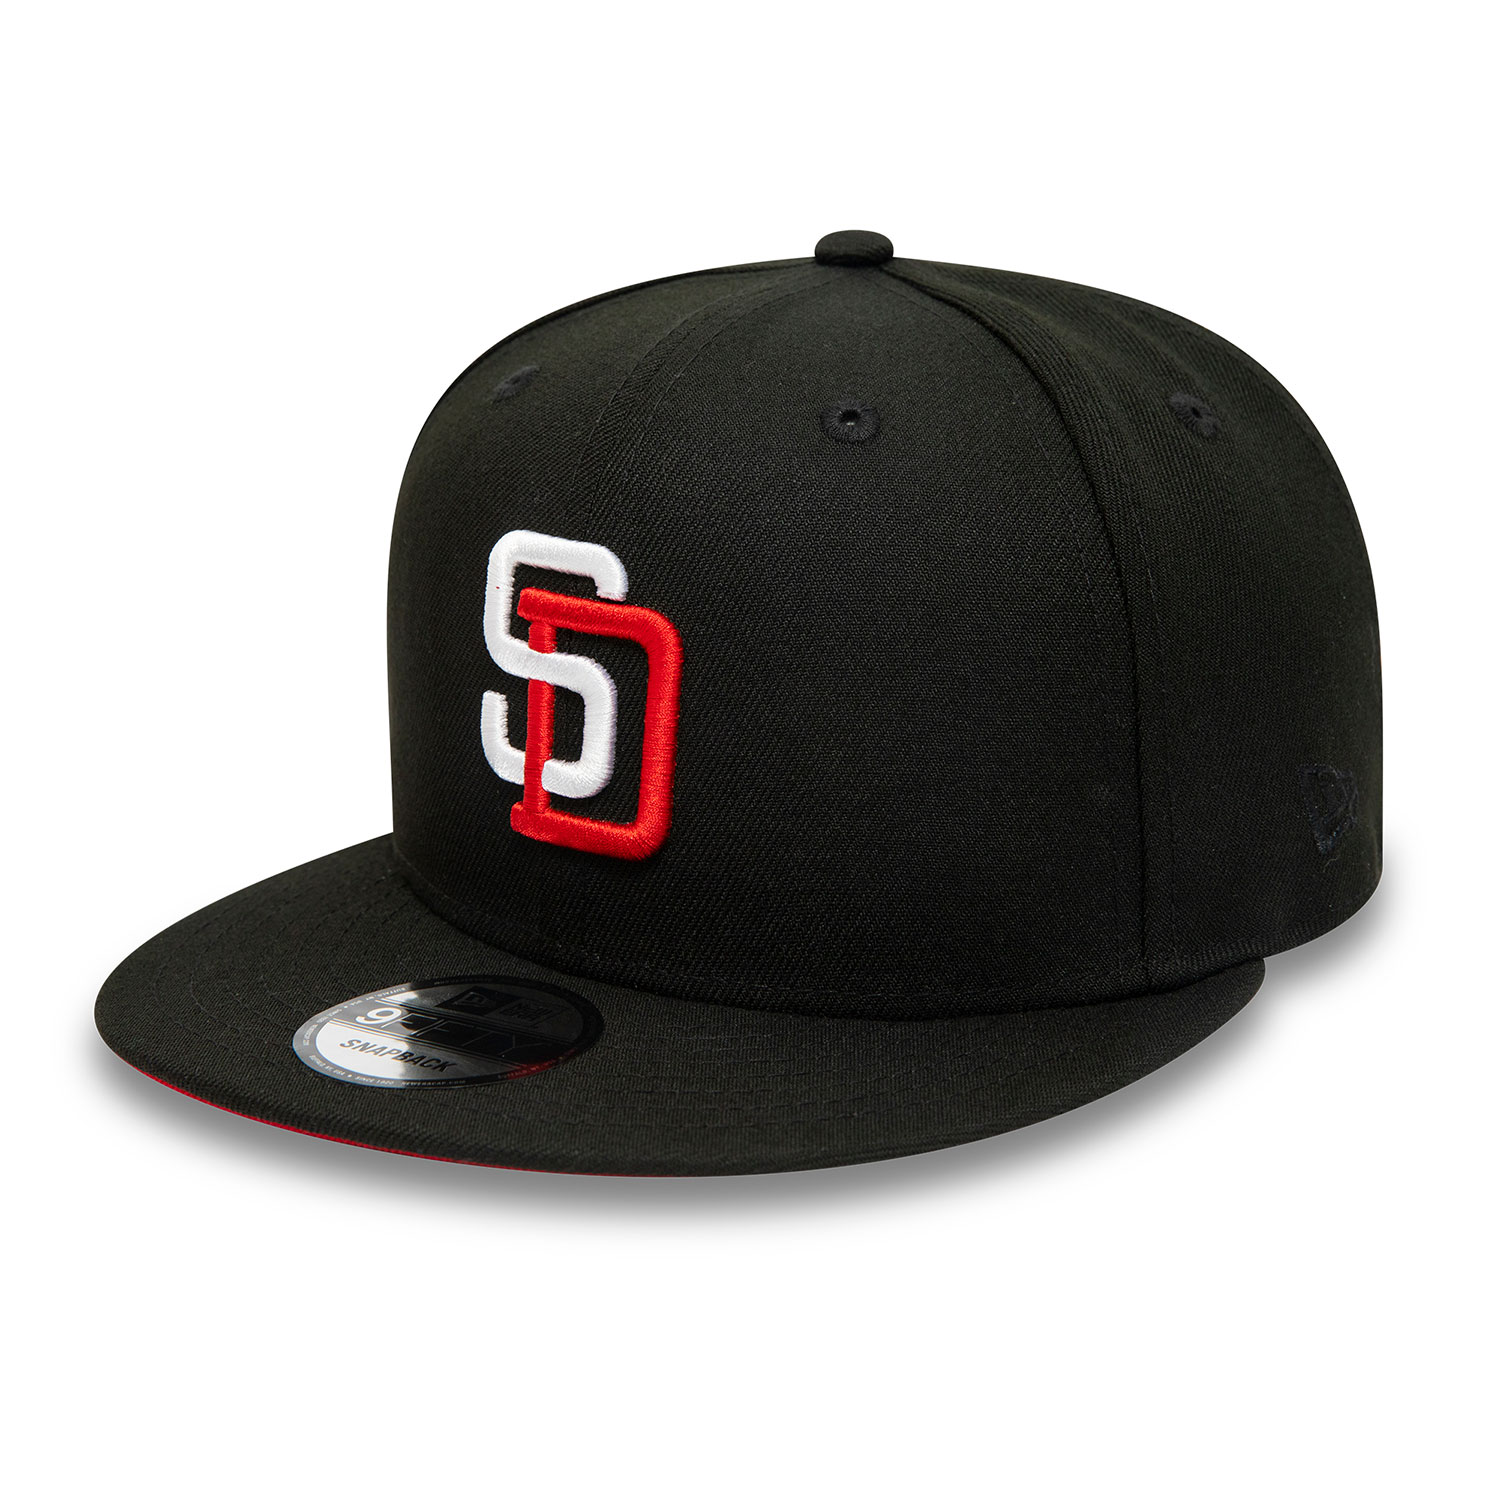 Official New Era San Diego Padres MLB Black 9FIFTY Snapback Cap B8238_286